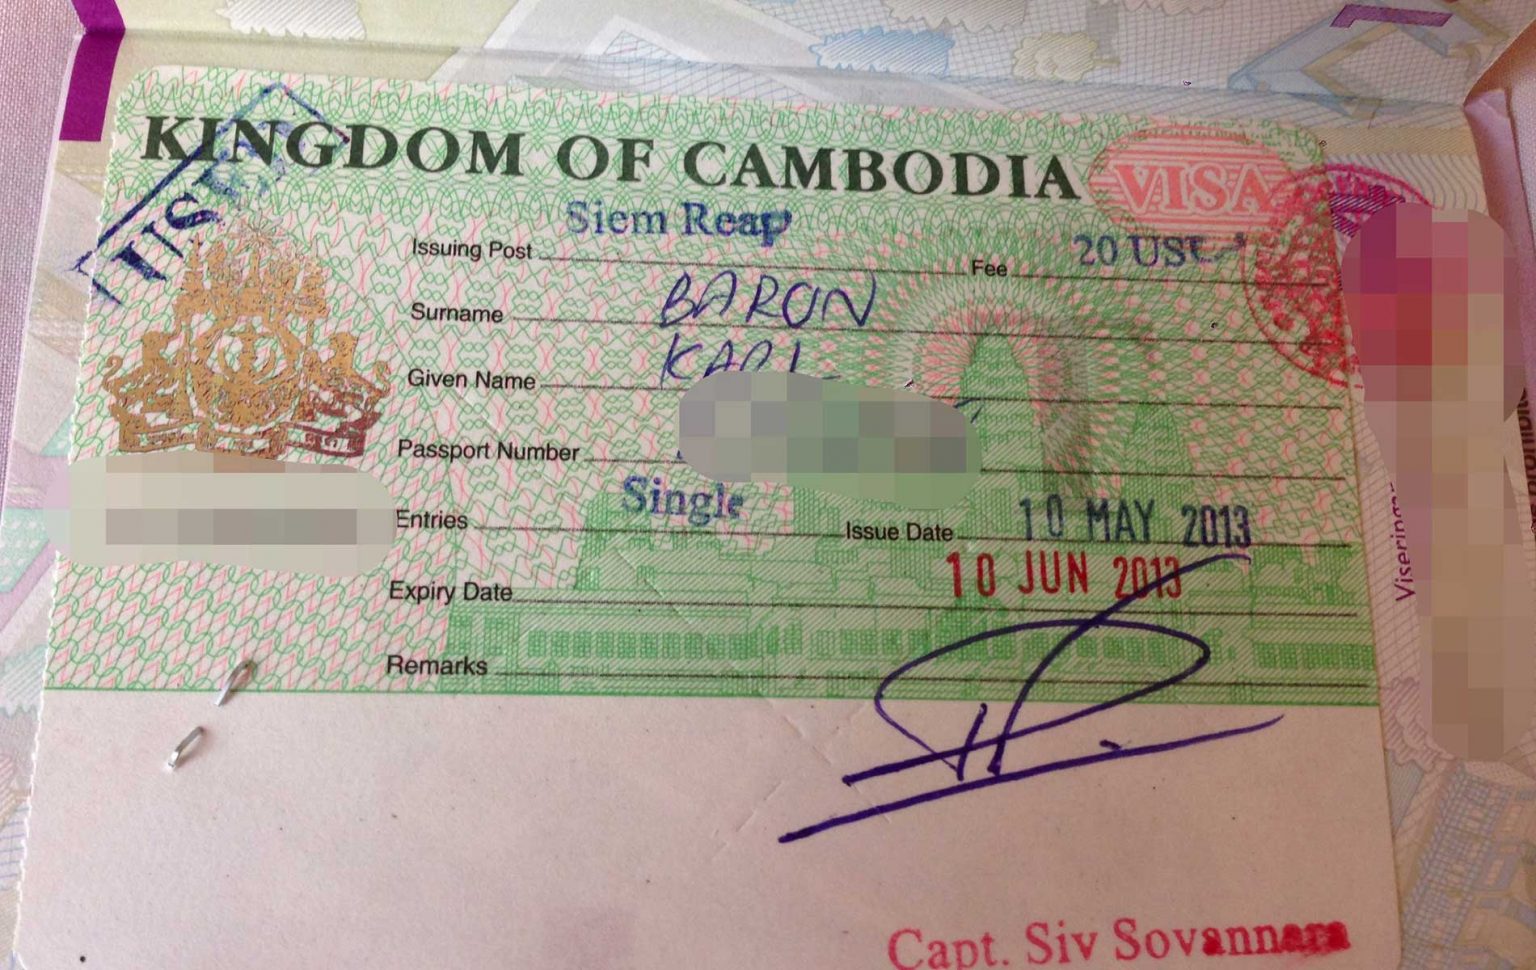 cambodia tourist visa fee